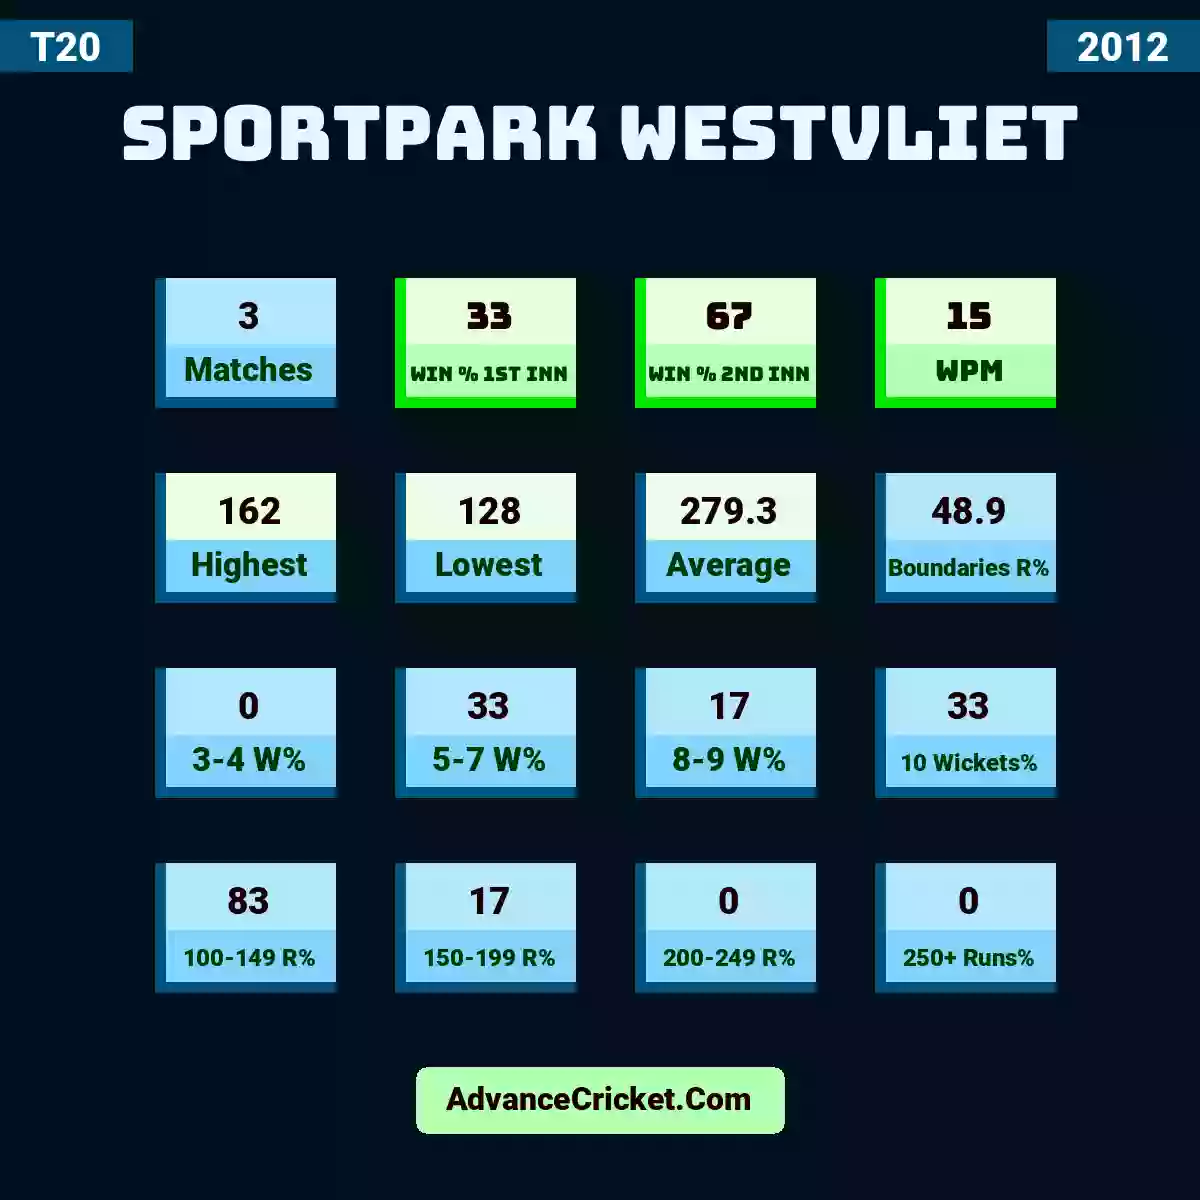 Image showing Sportpark Westvliet with Matches: 3, Win % 1st Inn: 33, Win % 2nd Inn: 67, WPM: 15, Highest: 162, Lowest: 128, Average: 279.3, Boundaries R%: 48.9, 3-4 W%: 0, 5-7 W%: 33, 8-9 W%: 17, 10 Wickets%: 33, 100-149 R%: 83, 150-199 R%: 17, 200-249 R%: 0, 250+ Runs%: 0.